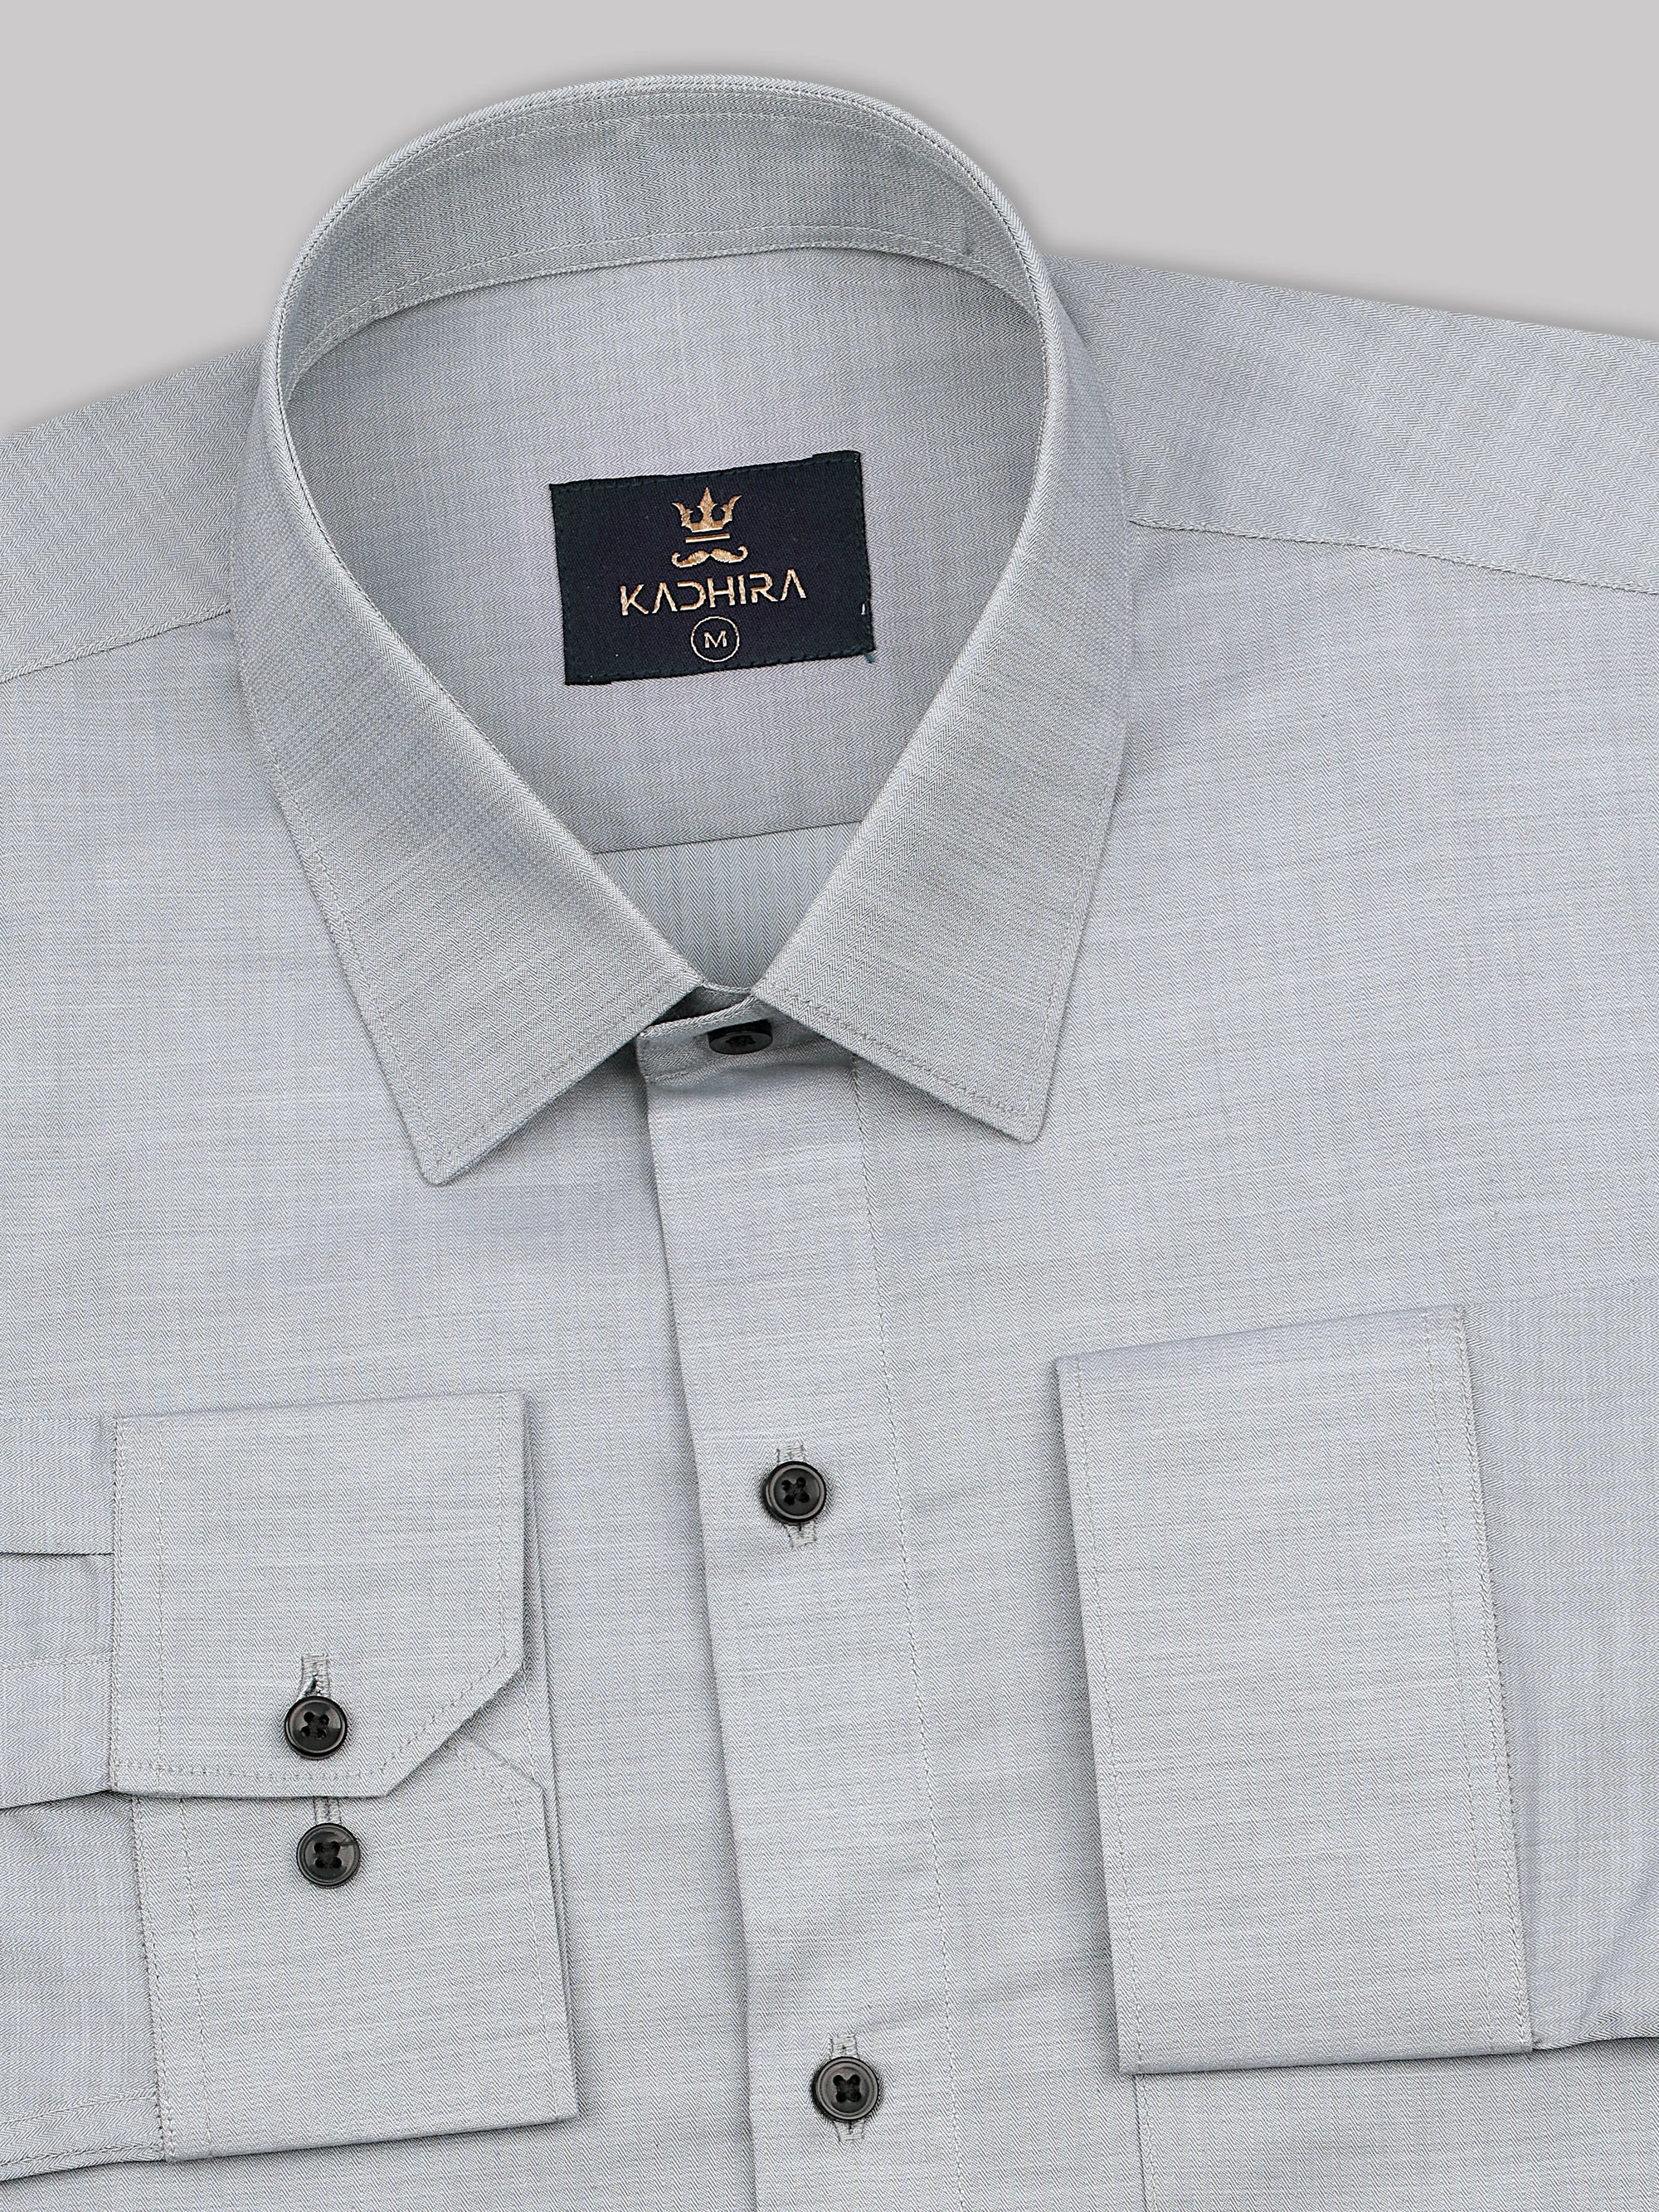 Medium Gray With White Chevron Pattern Super Luxurious Cotton Shirt